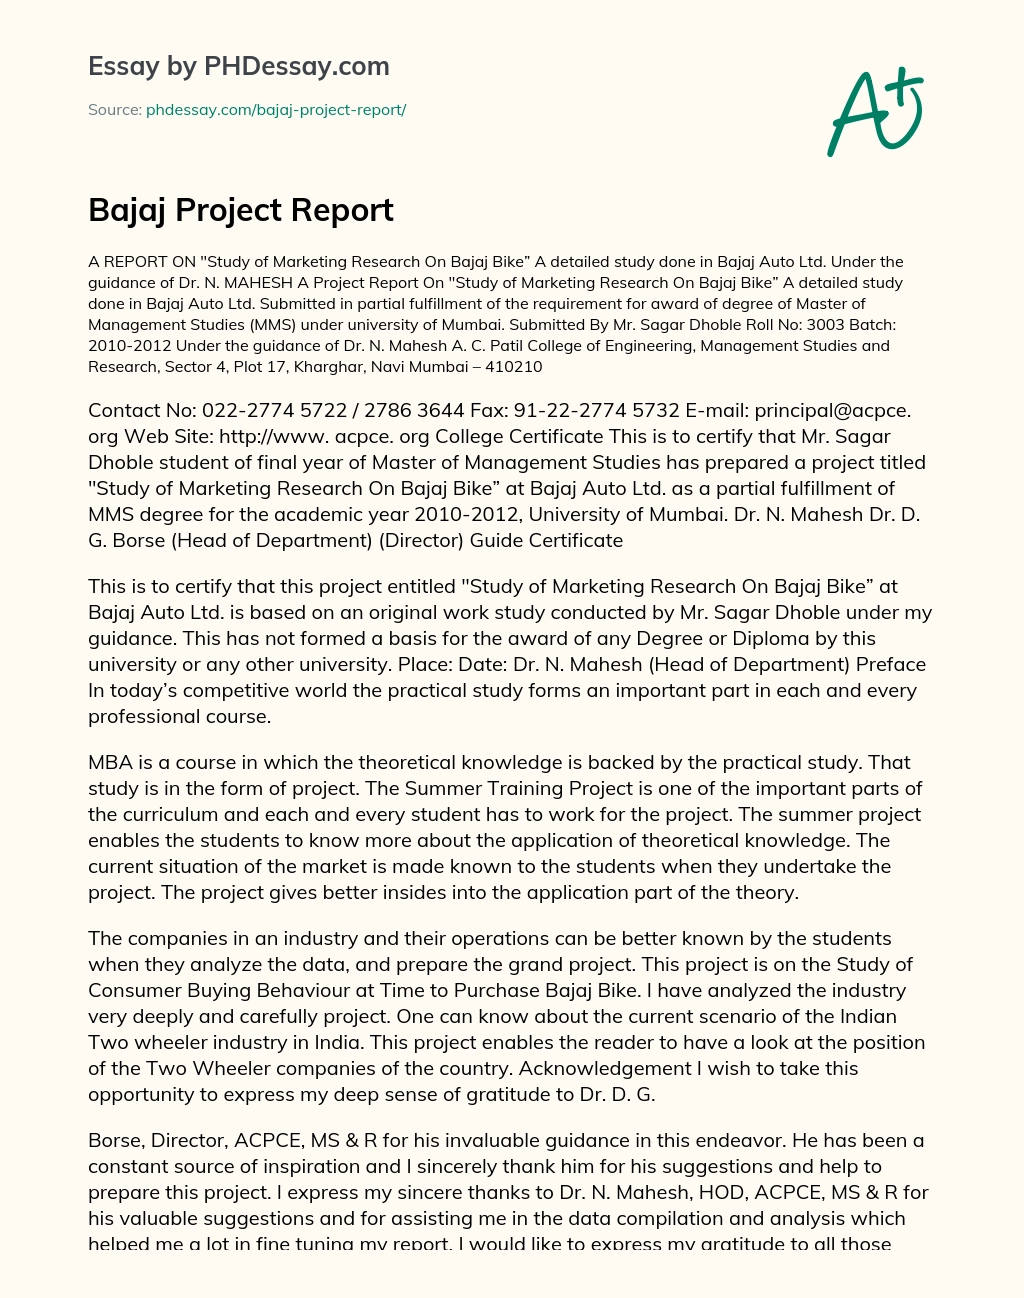 Bajaj Project Report essay